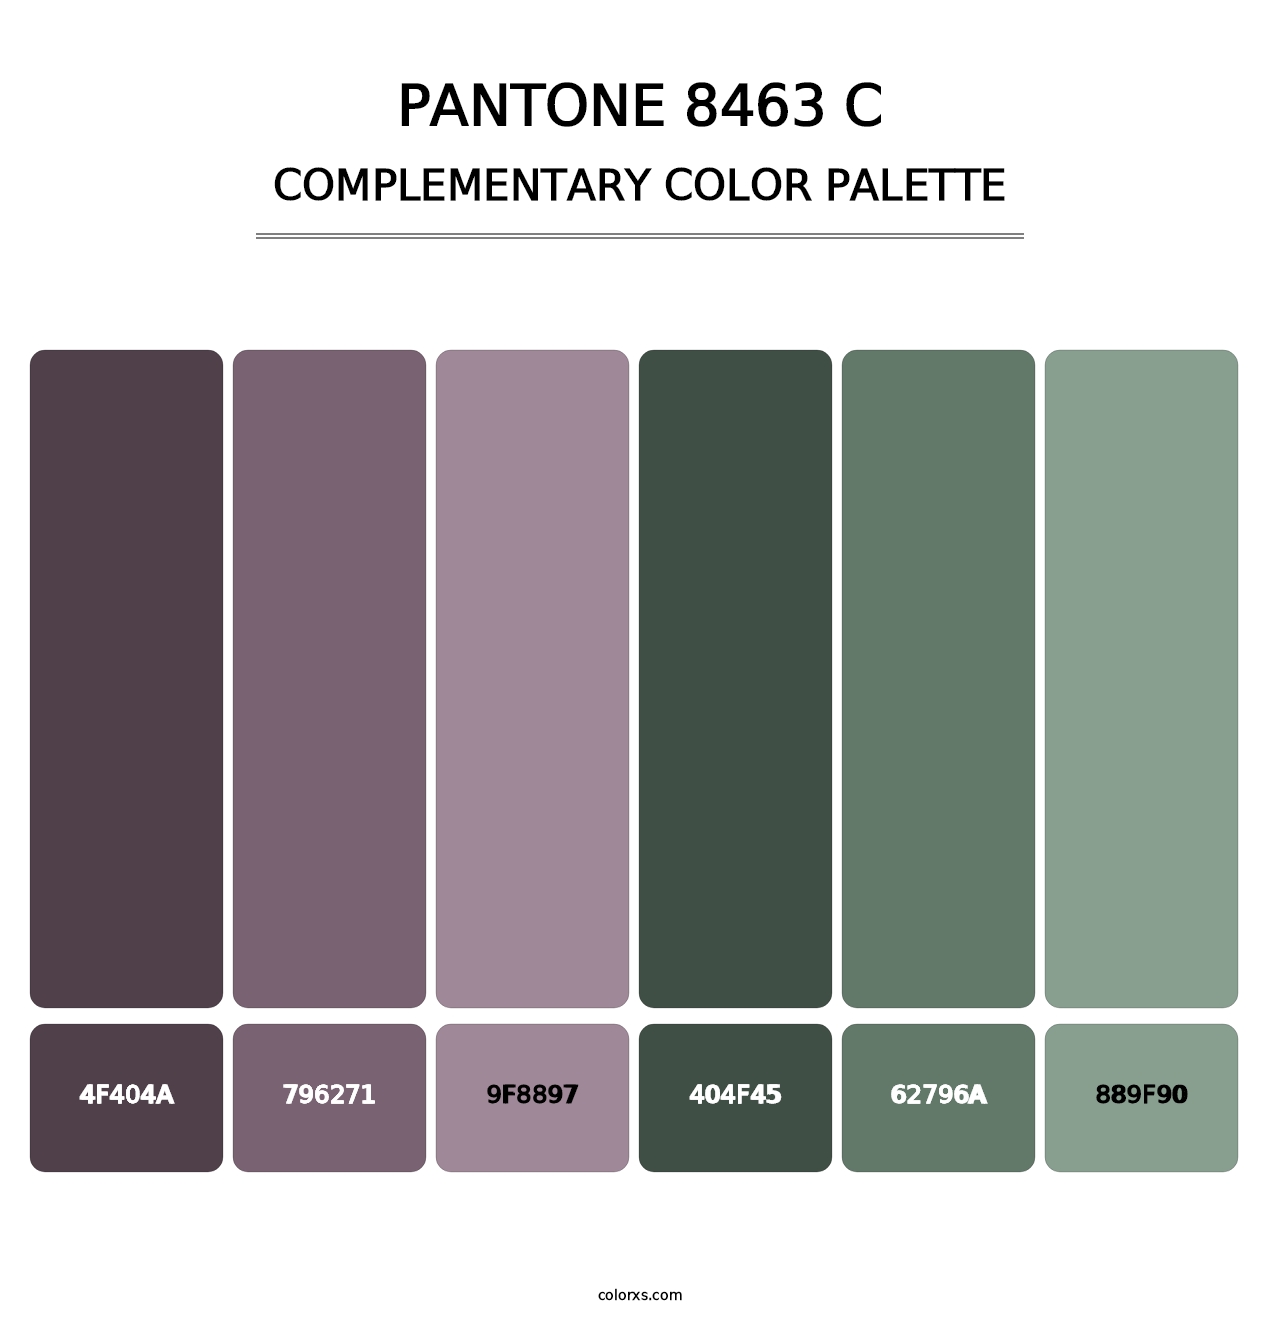 PANTONE 8463 C - Complementary Color Palette